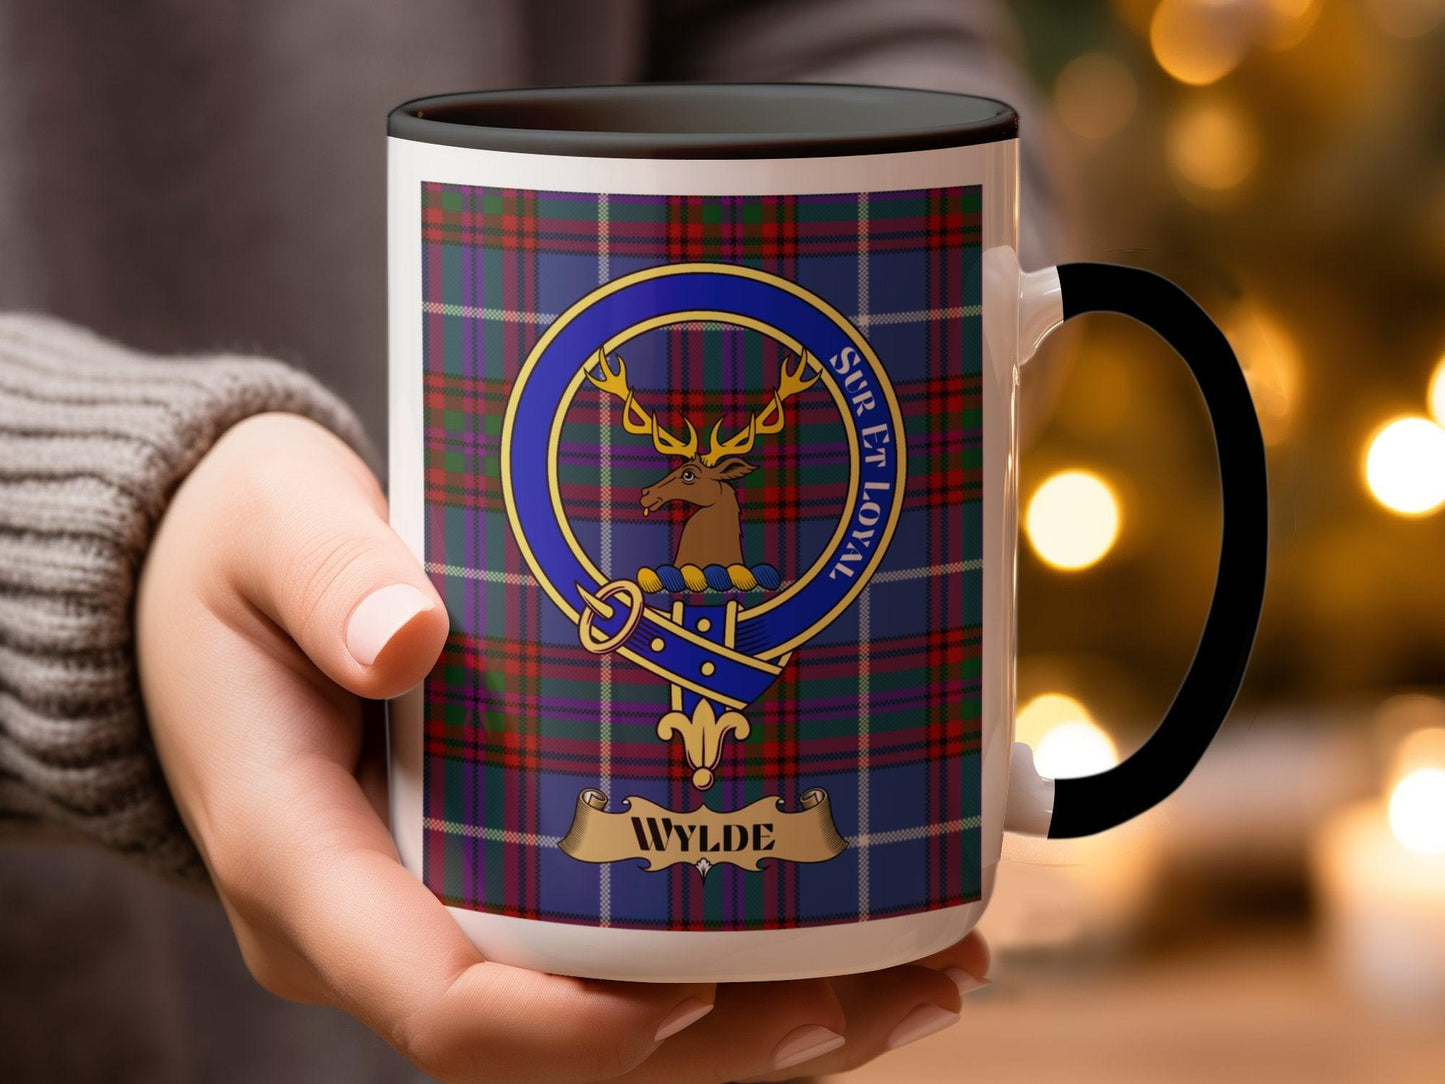 Wylde Clan Crest Mug Scottish Tartan Plaid Design Mug - Living Stone Gifts